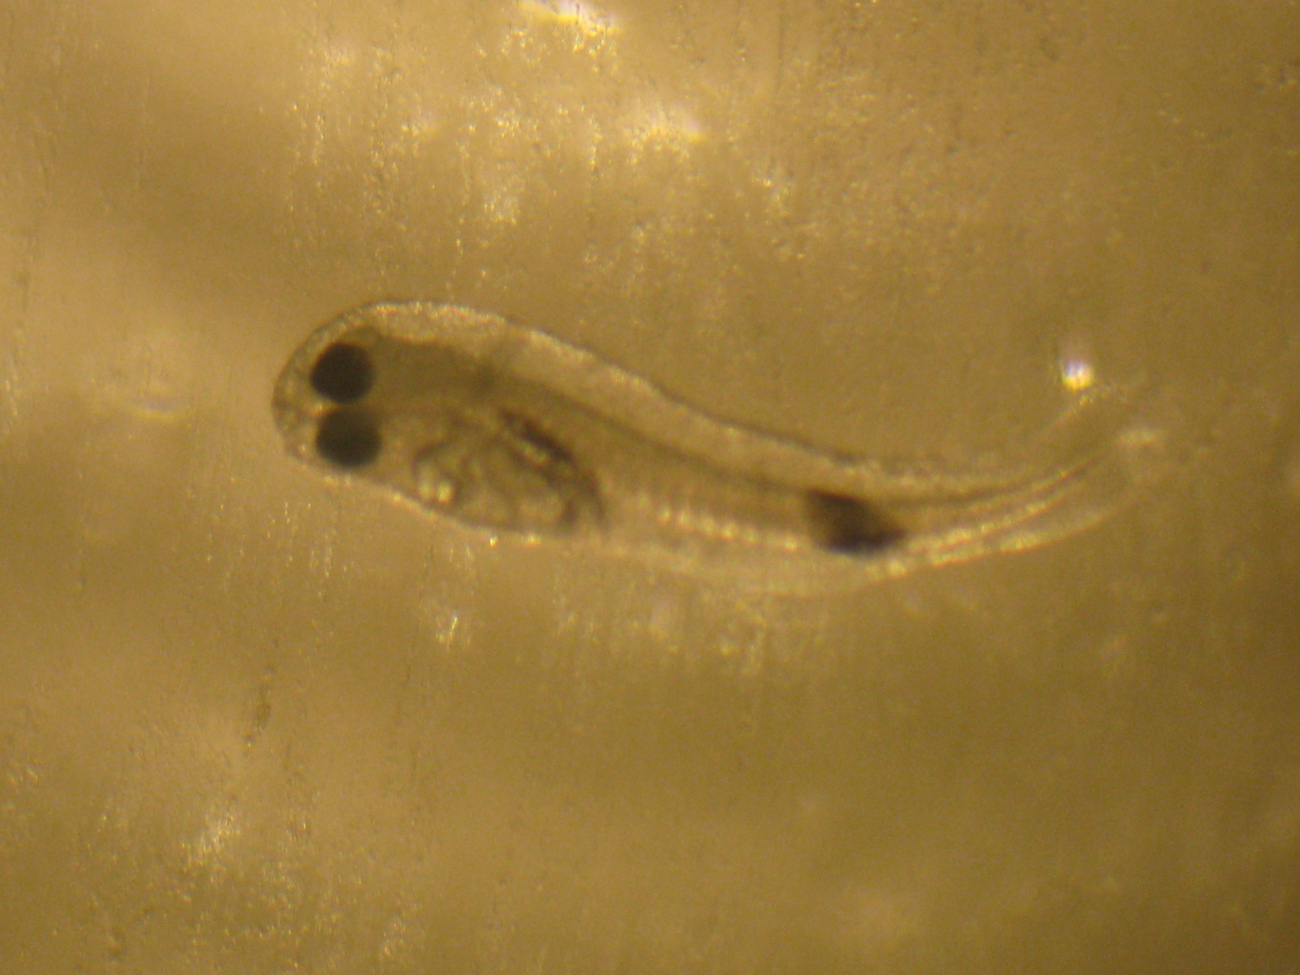 Through the microscope - fish larva